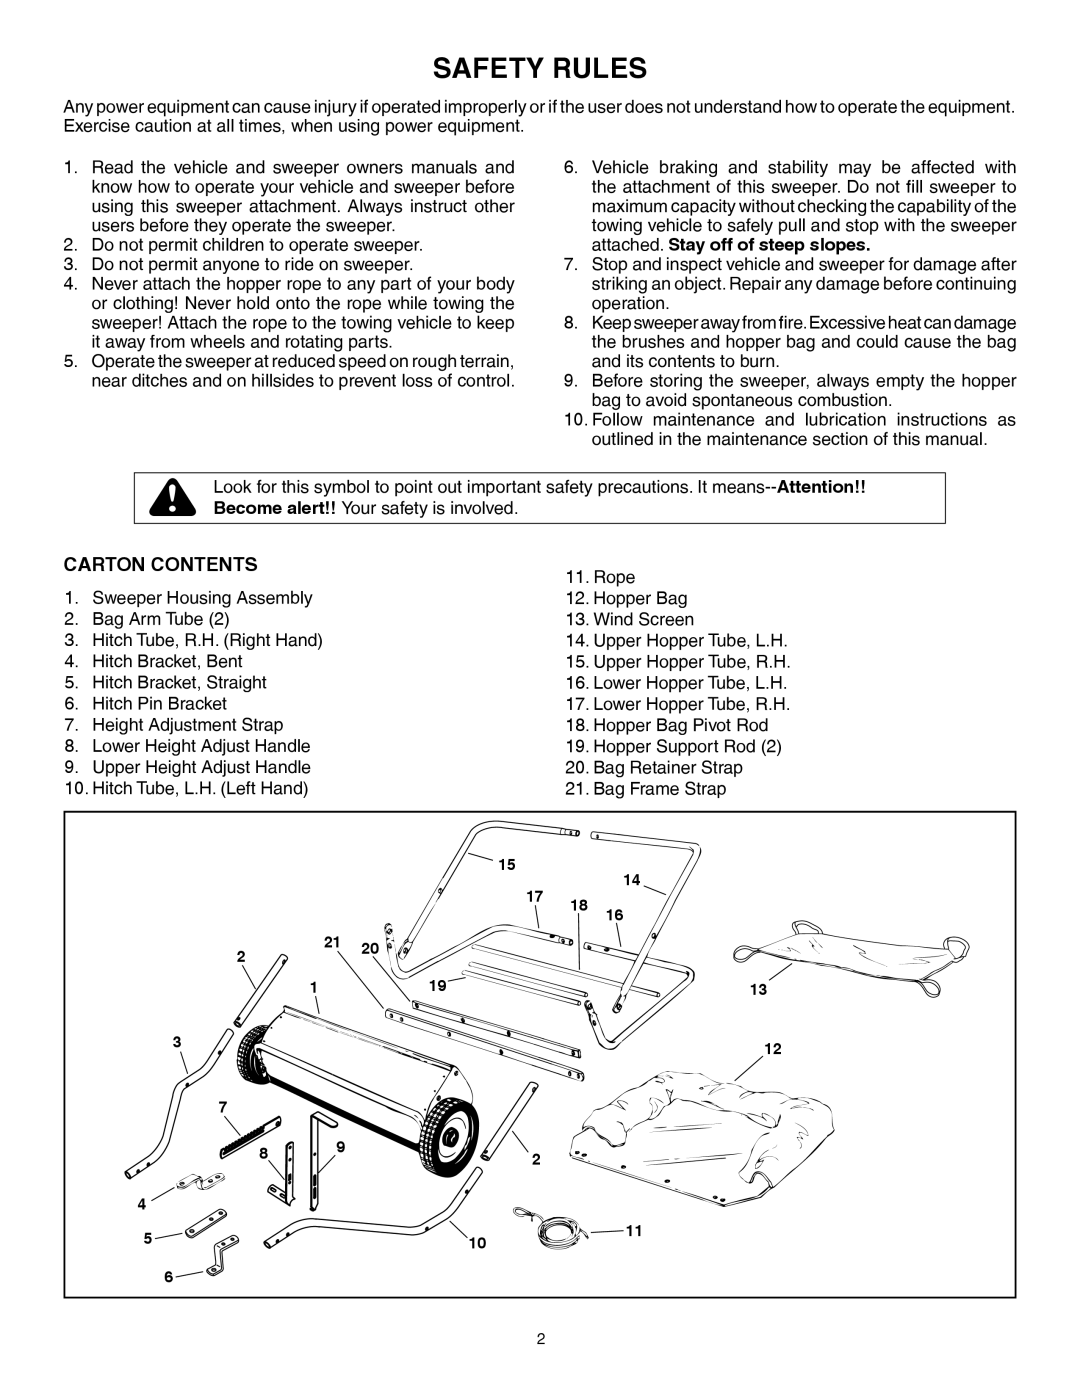 Husqvarna 45-0352 manual Carton Contents, Safety Rules 